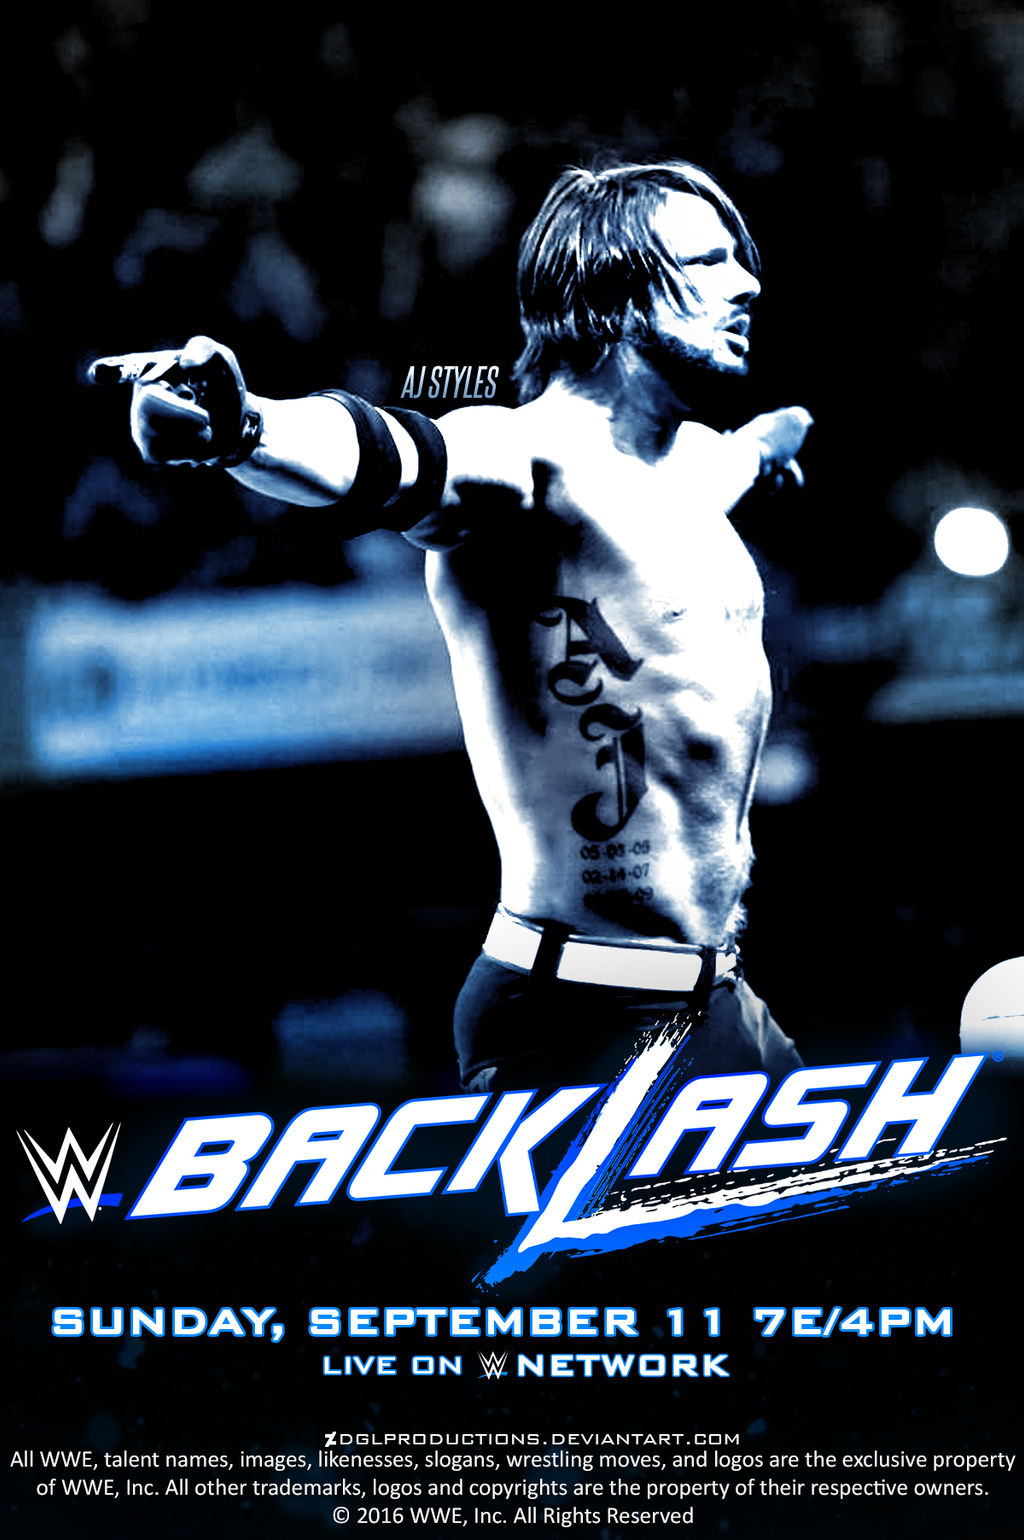 WWE Backlash 2016 - AJ Styles Version by DGLProductions on DeviantArt